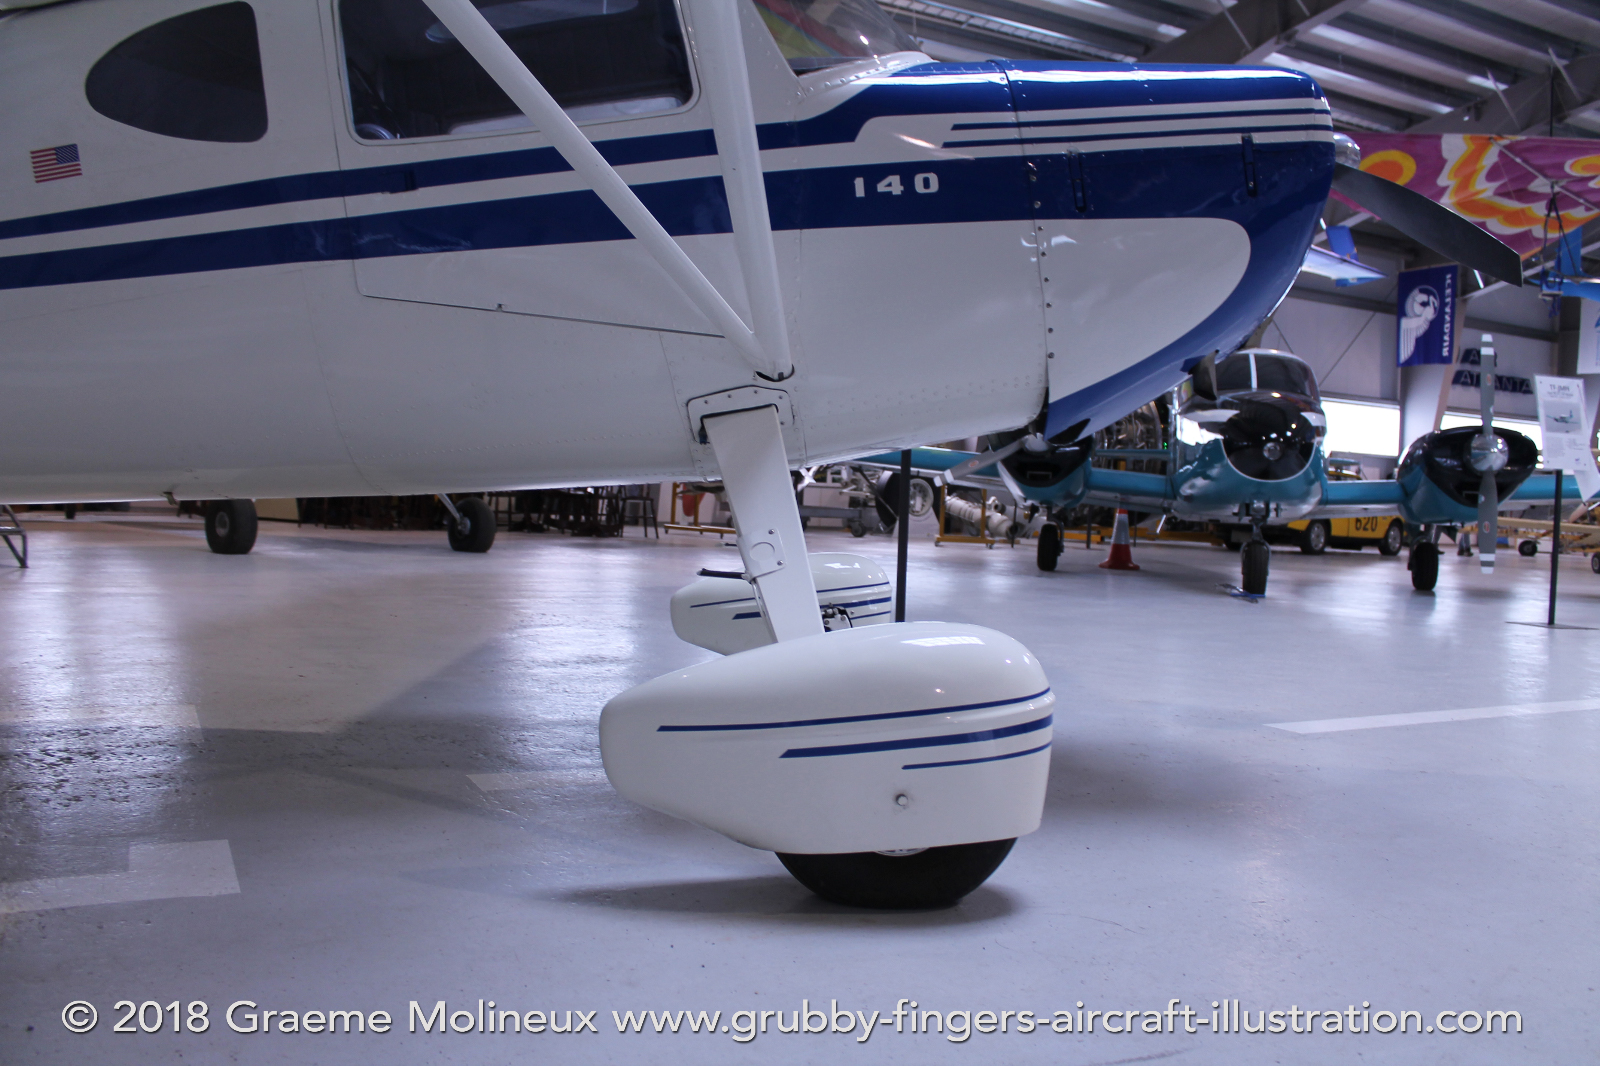 Cessna%20140%20TF-AST%20Iceland%202017%2083%20Graeme%20Molineux